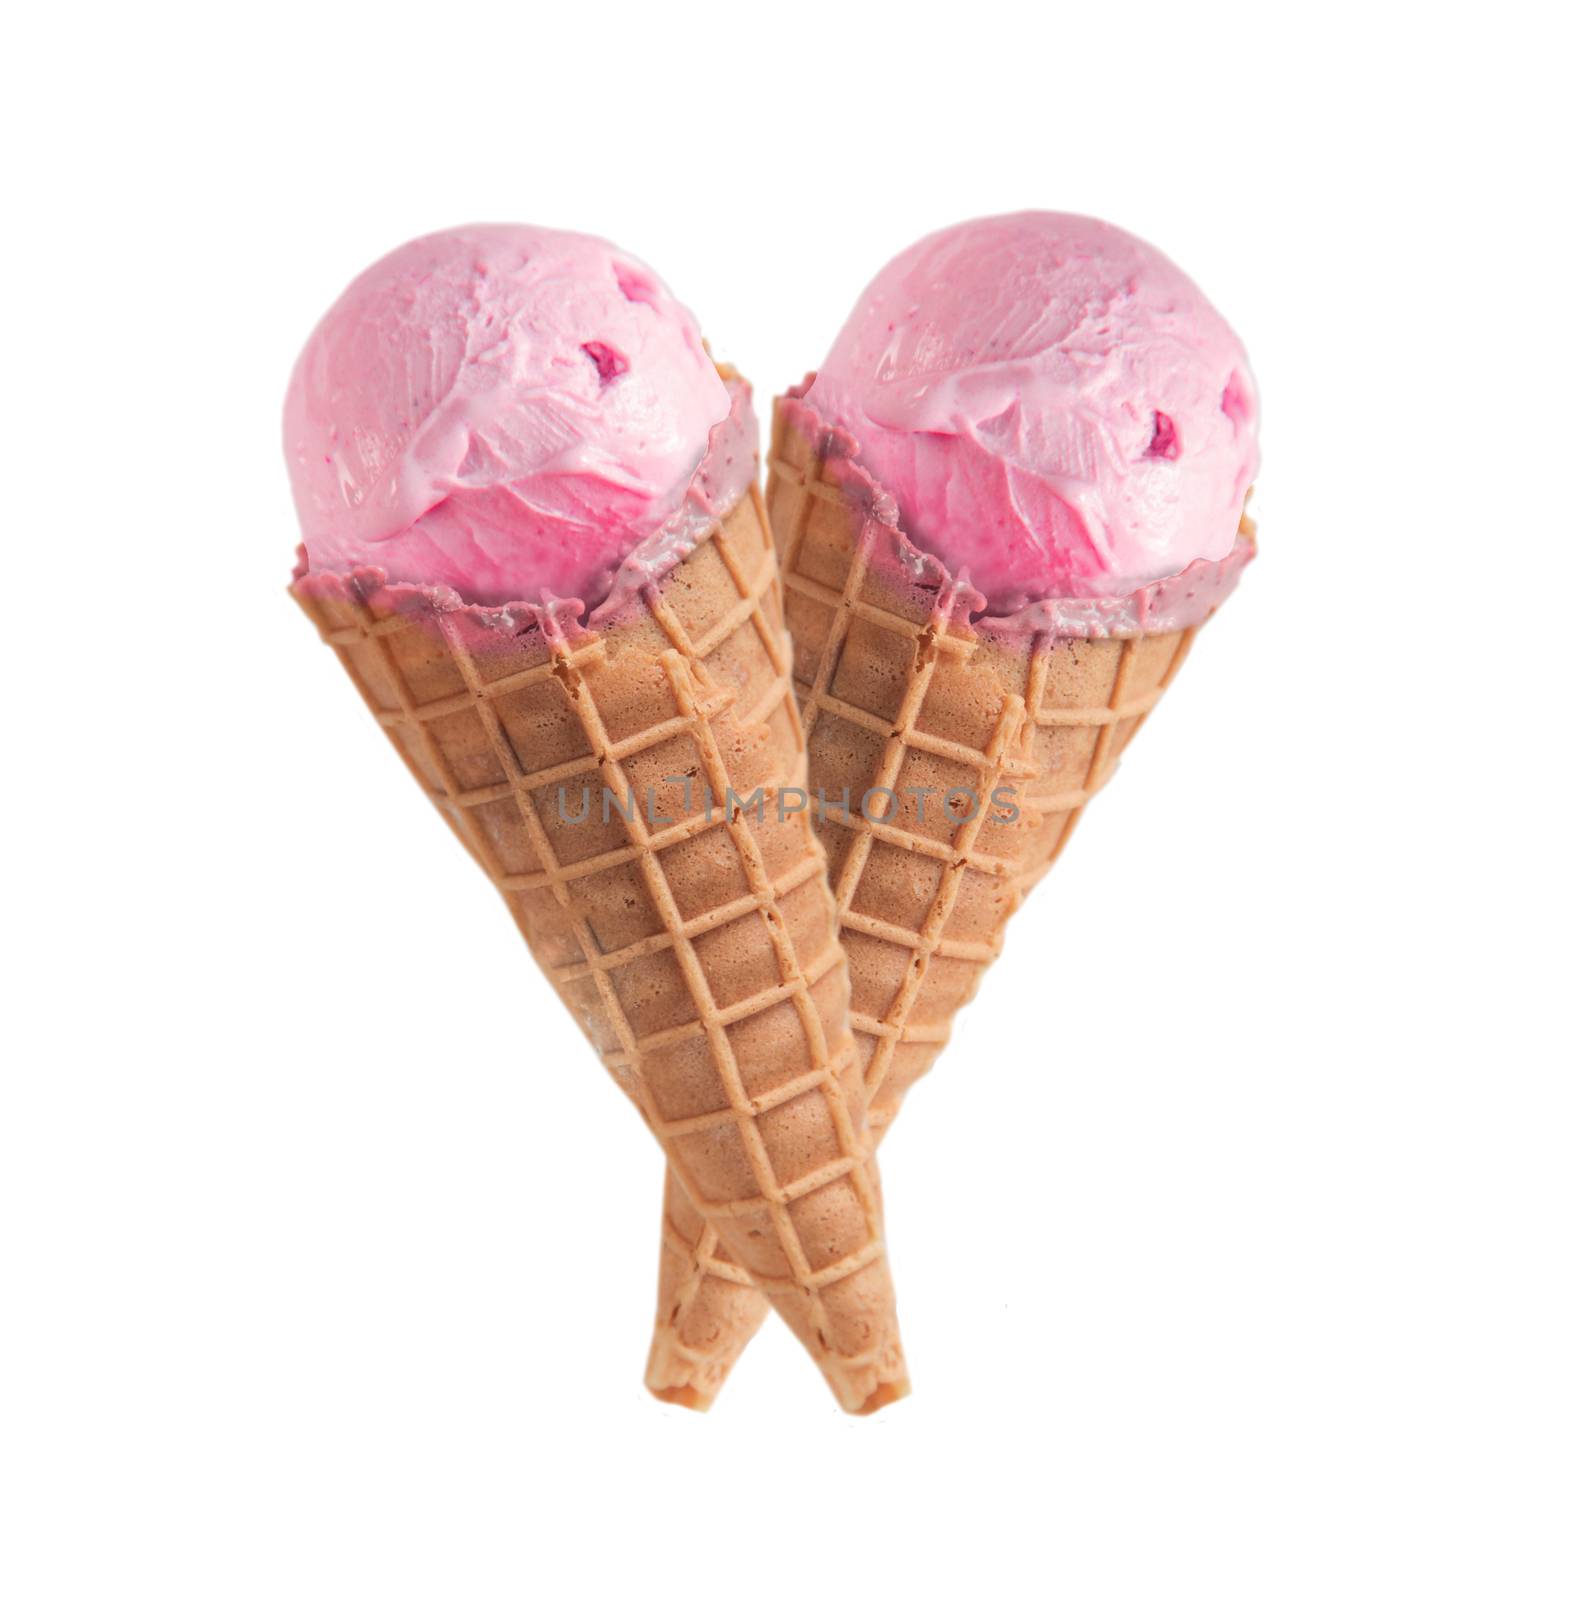 Two strawberry flavor ice cream cones in a heart shape by haiderazim